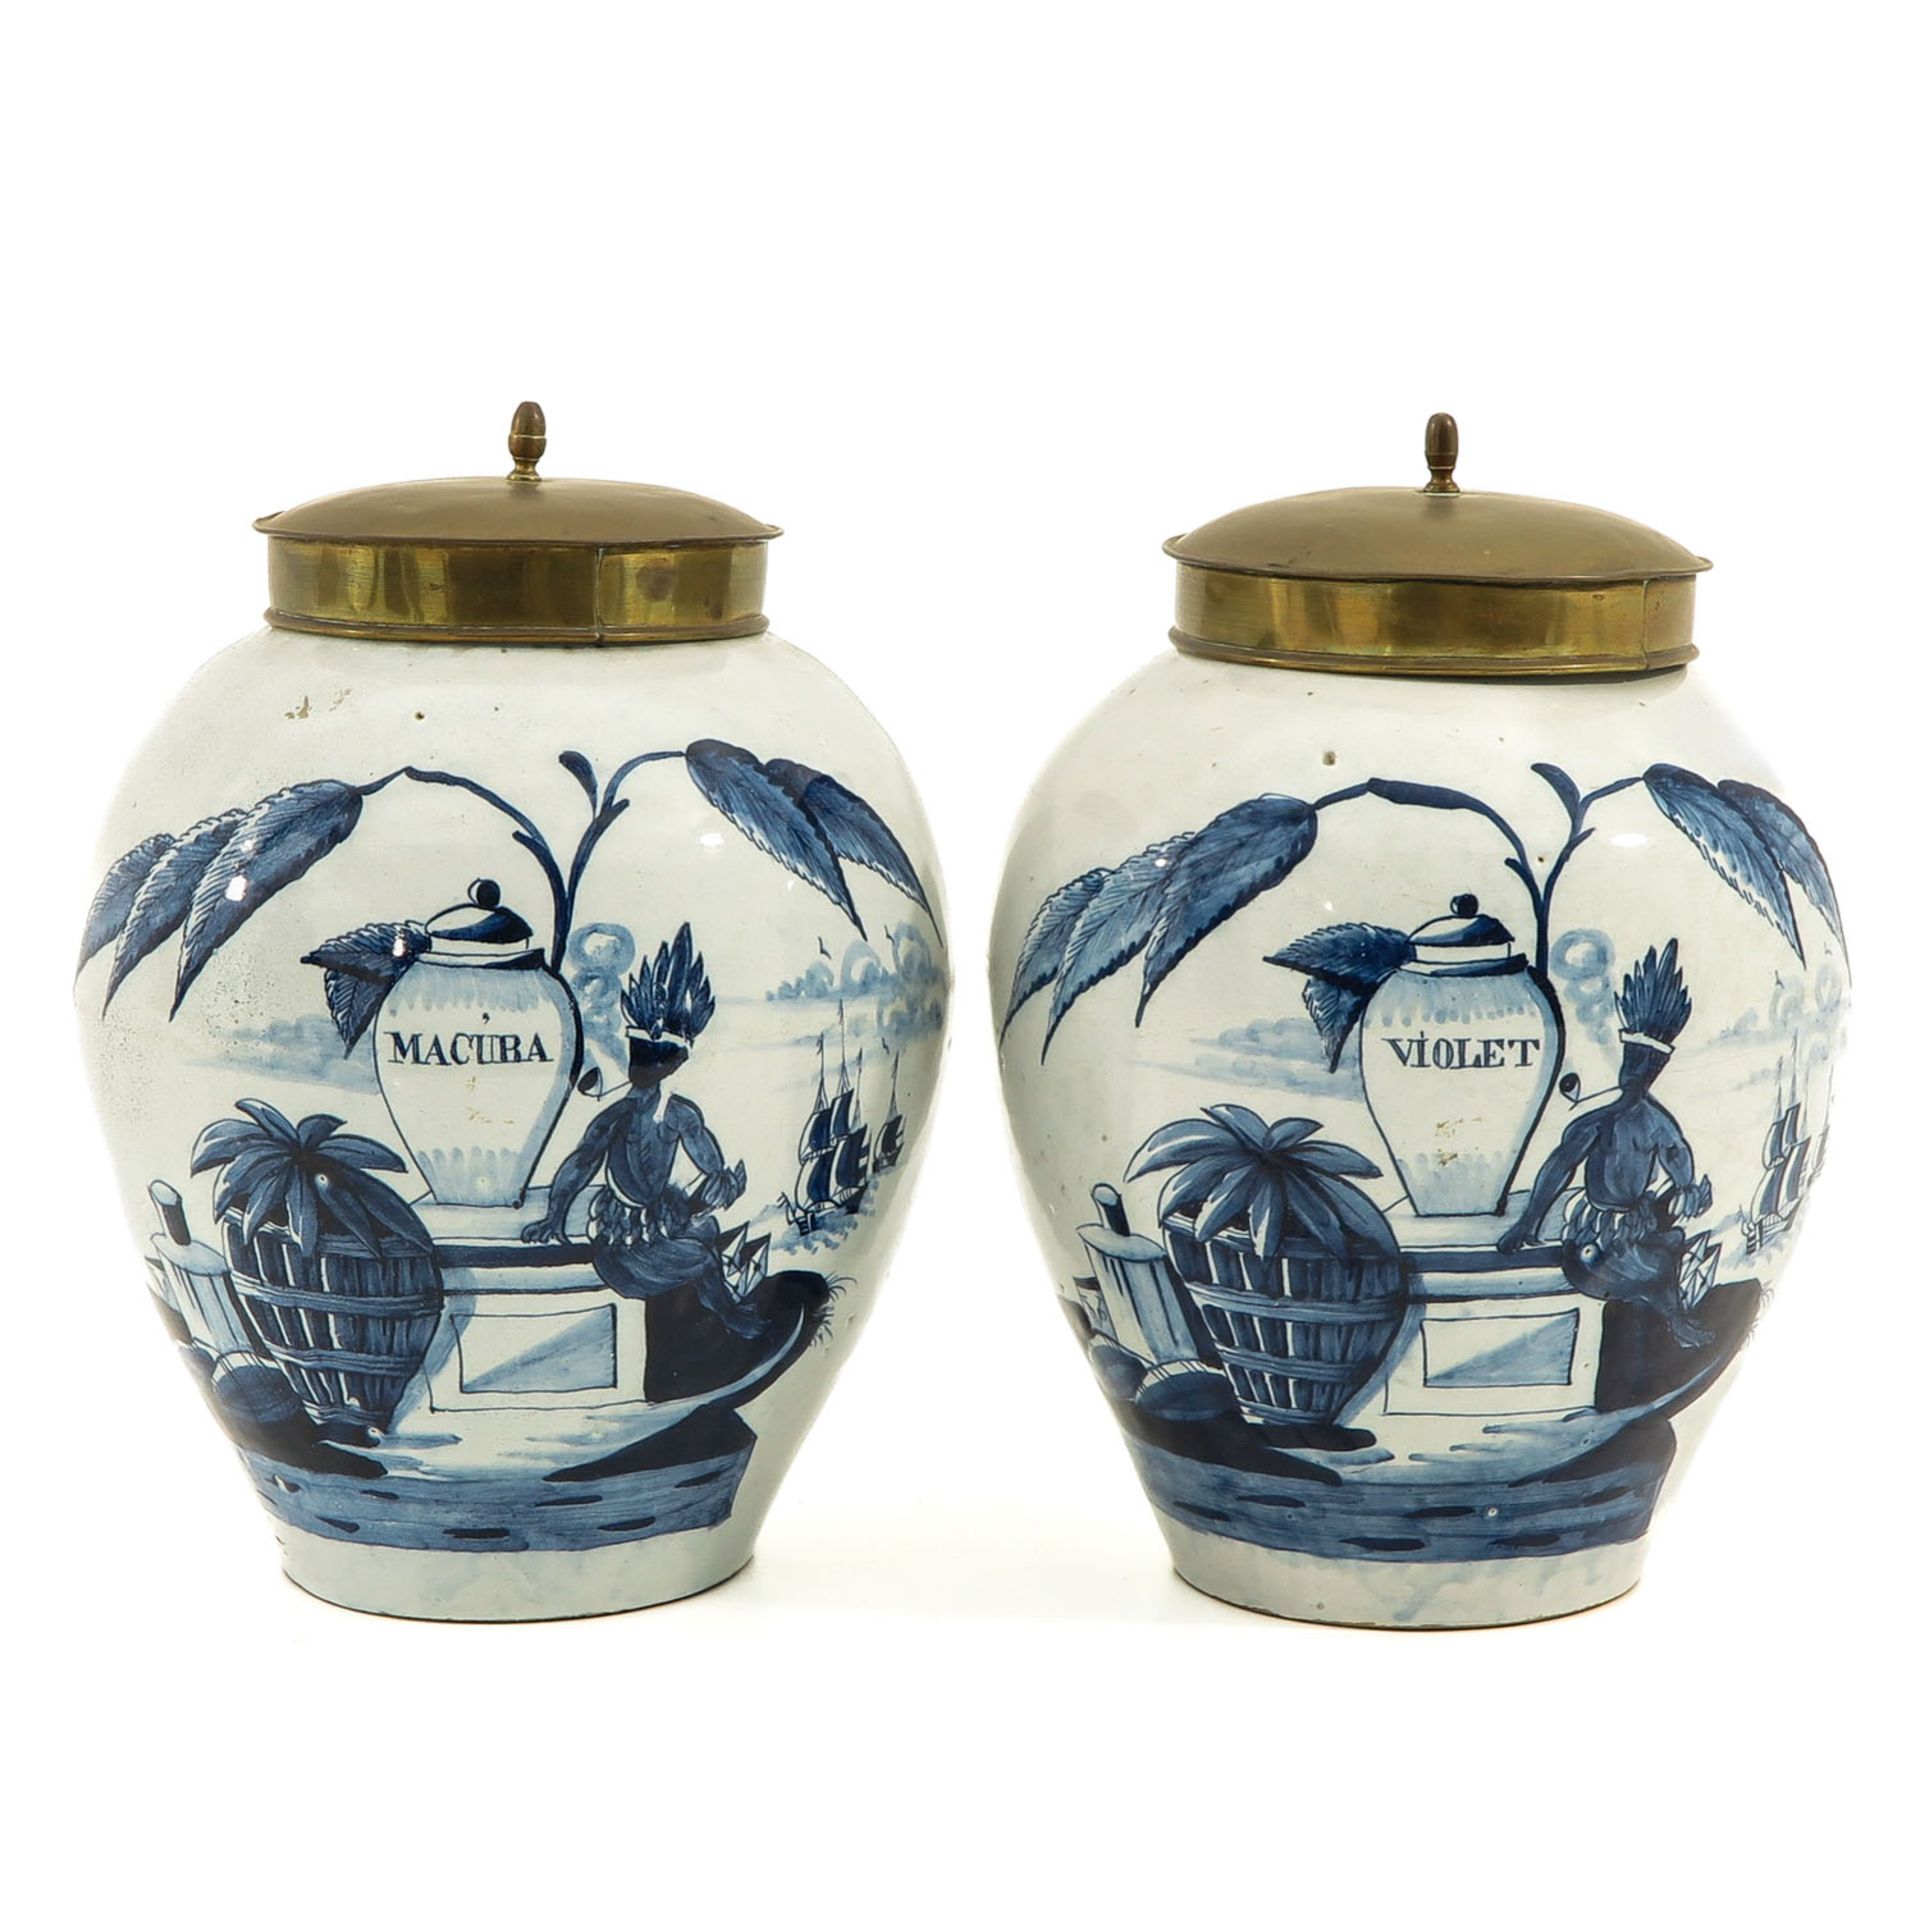 A Pair of Delft 18th Century Tobacco Jars